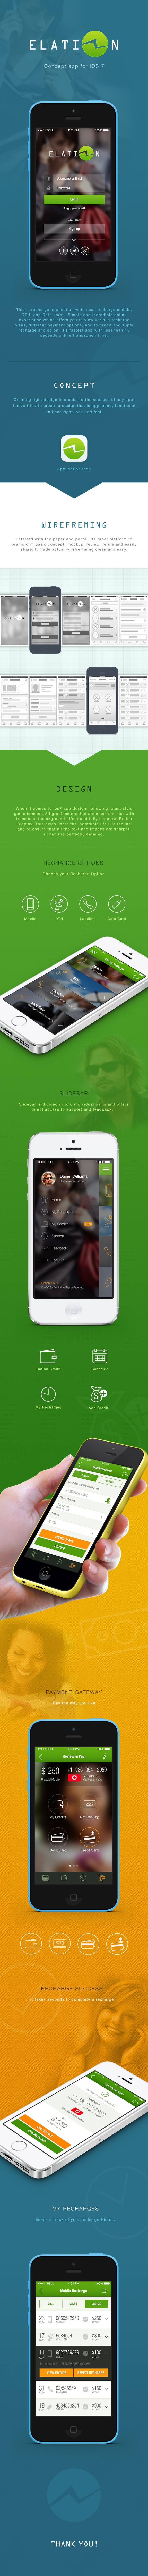 ios7 UI ux flat flat design i Phone Interface app application RECHARGE wireframe photoshop Layout Web Native App